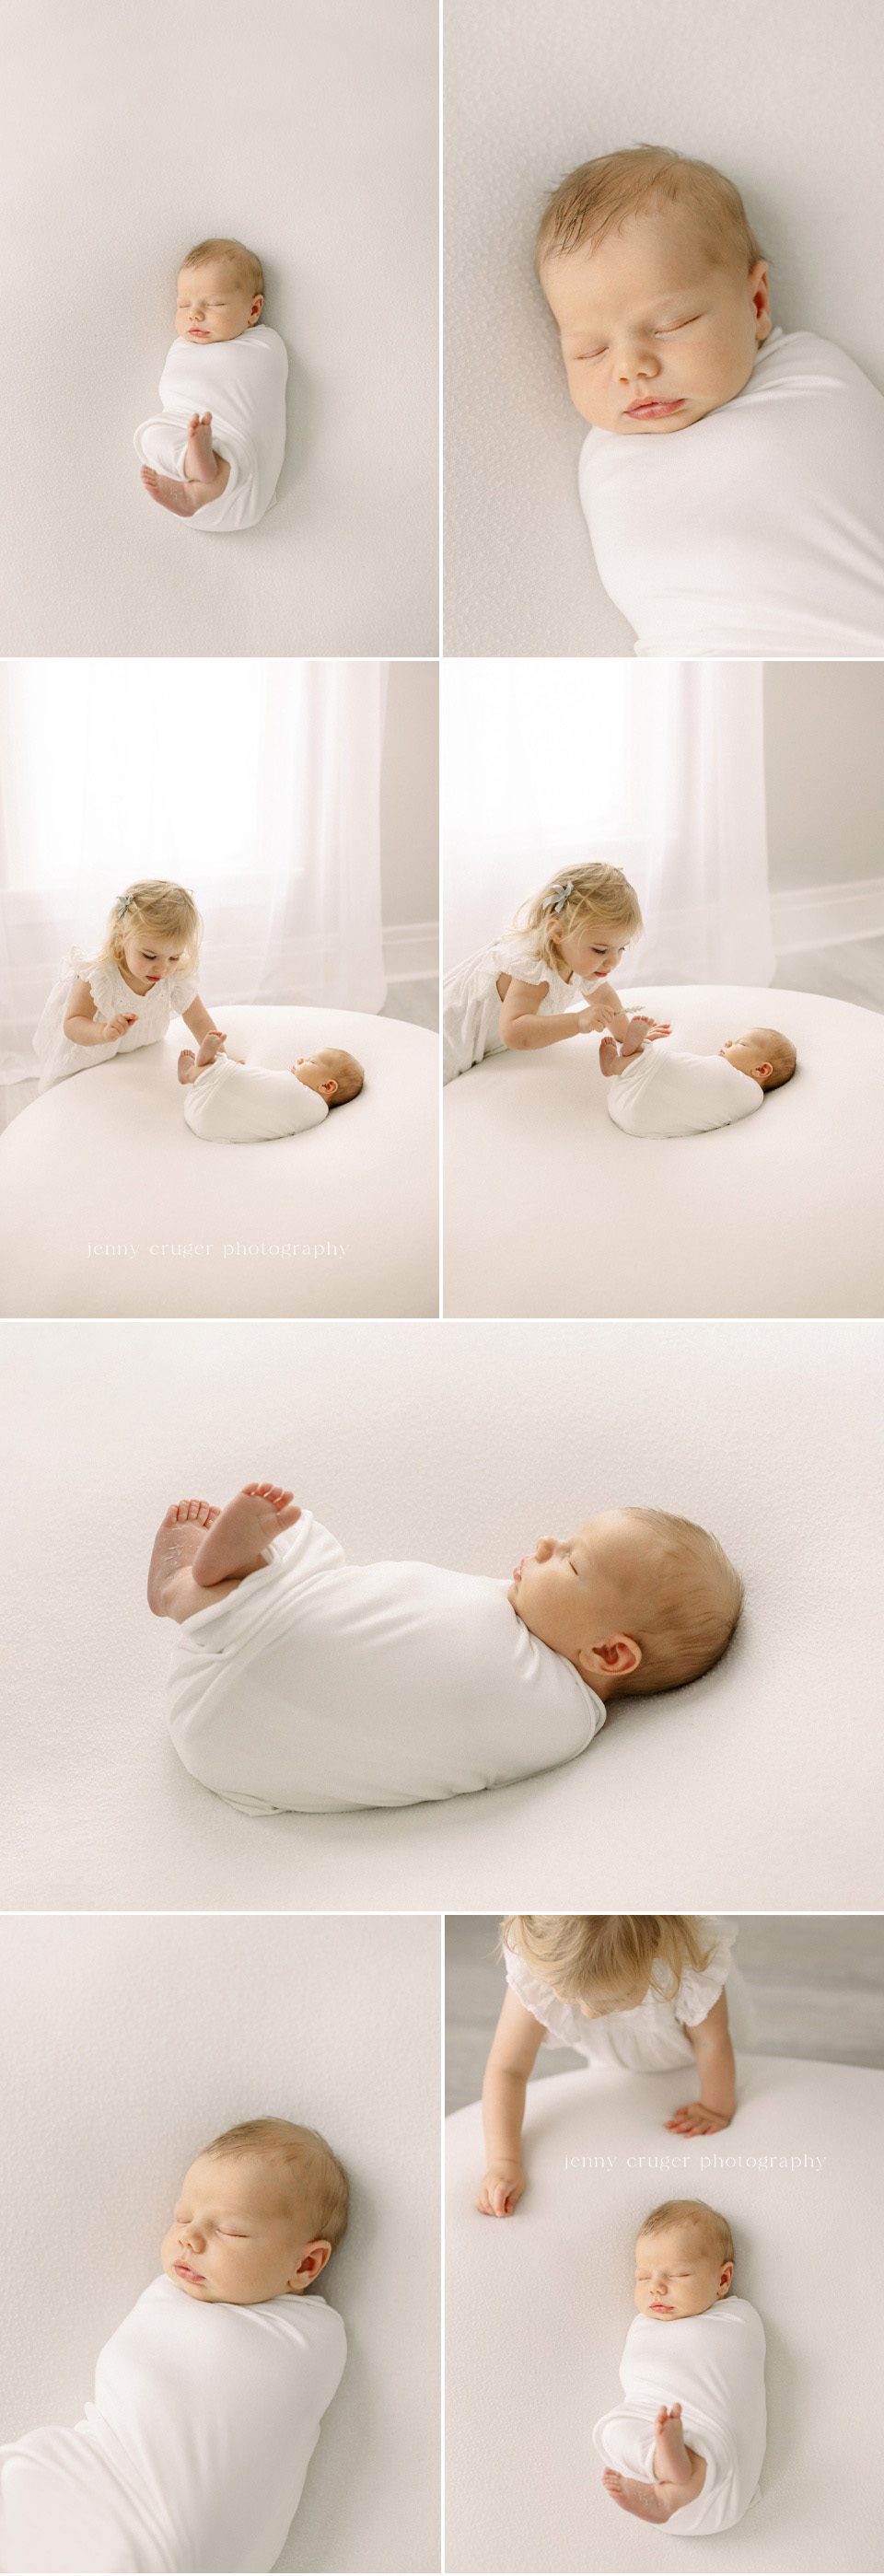 simple newborn session photos 